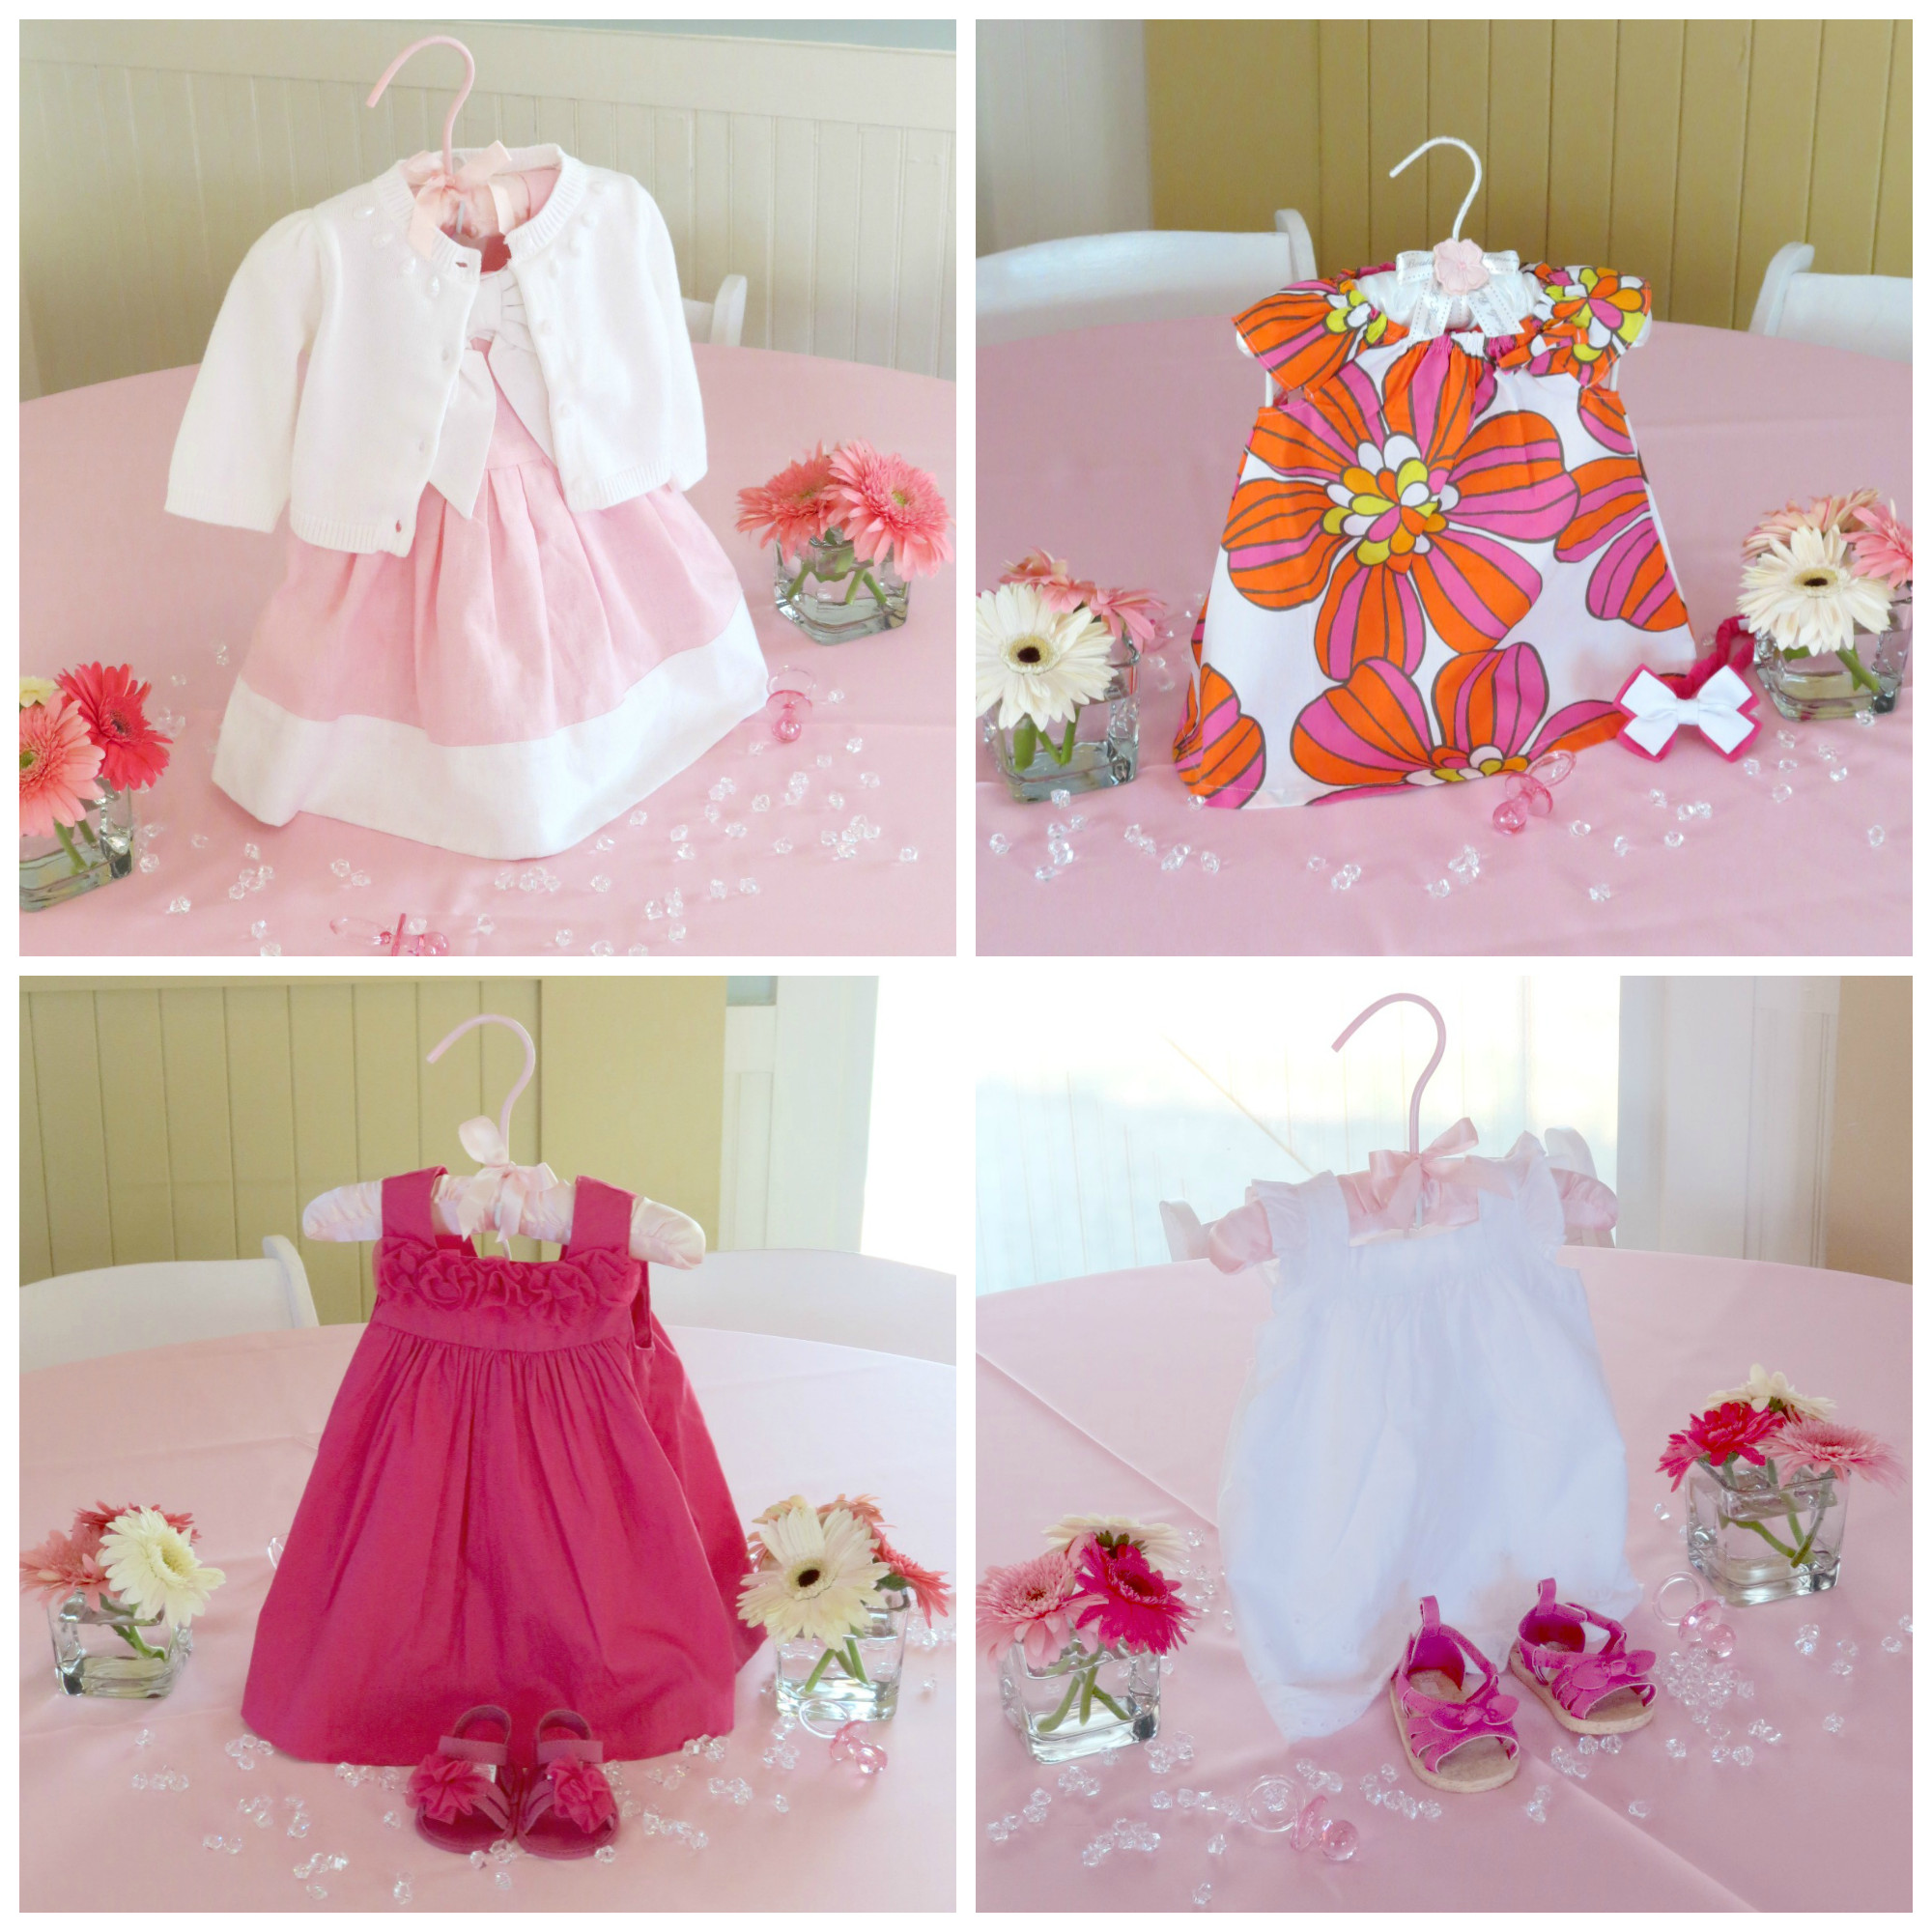 DIY Baby Shower Centerpieces
 DIY Baby Dress Centerpiece